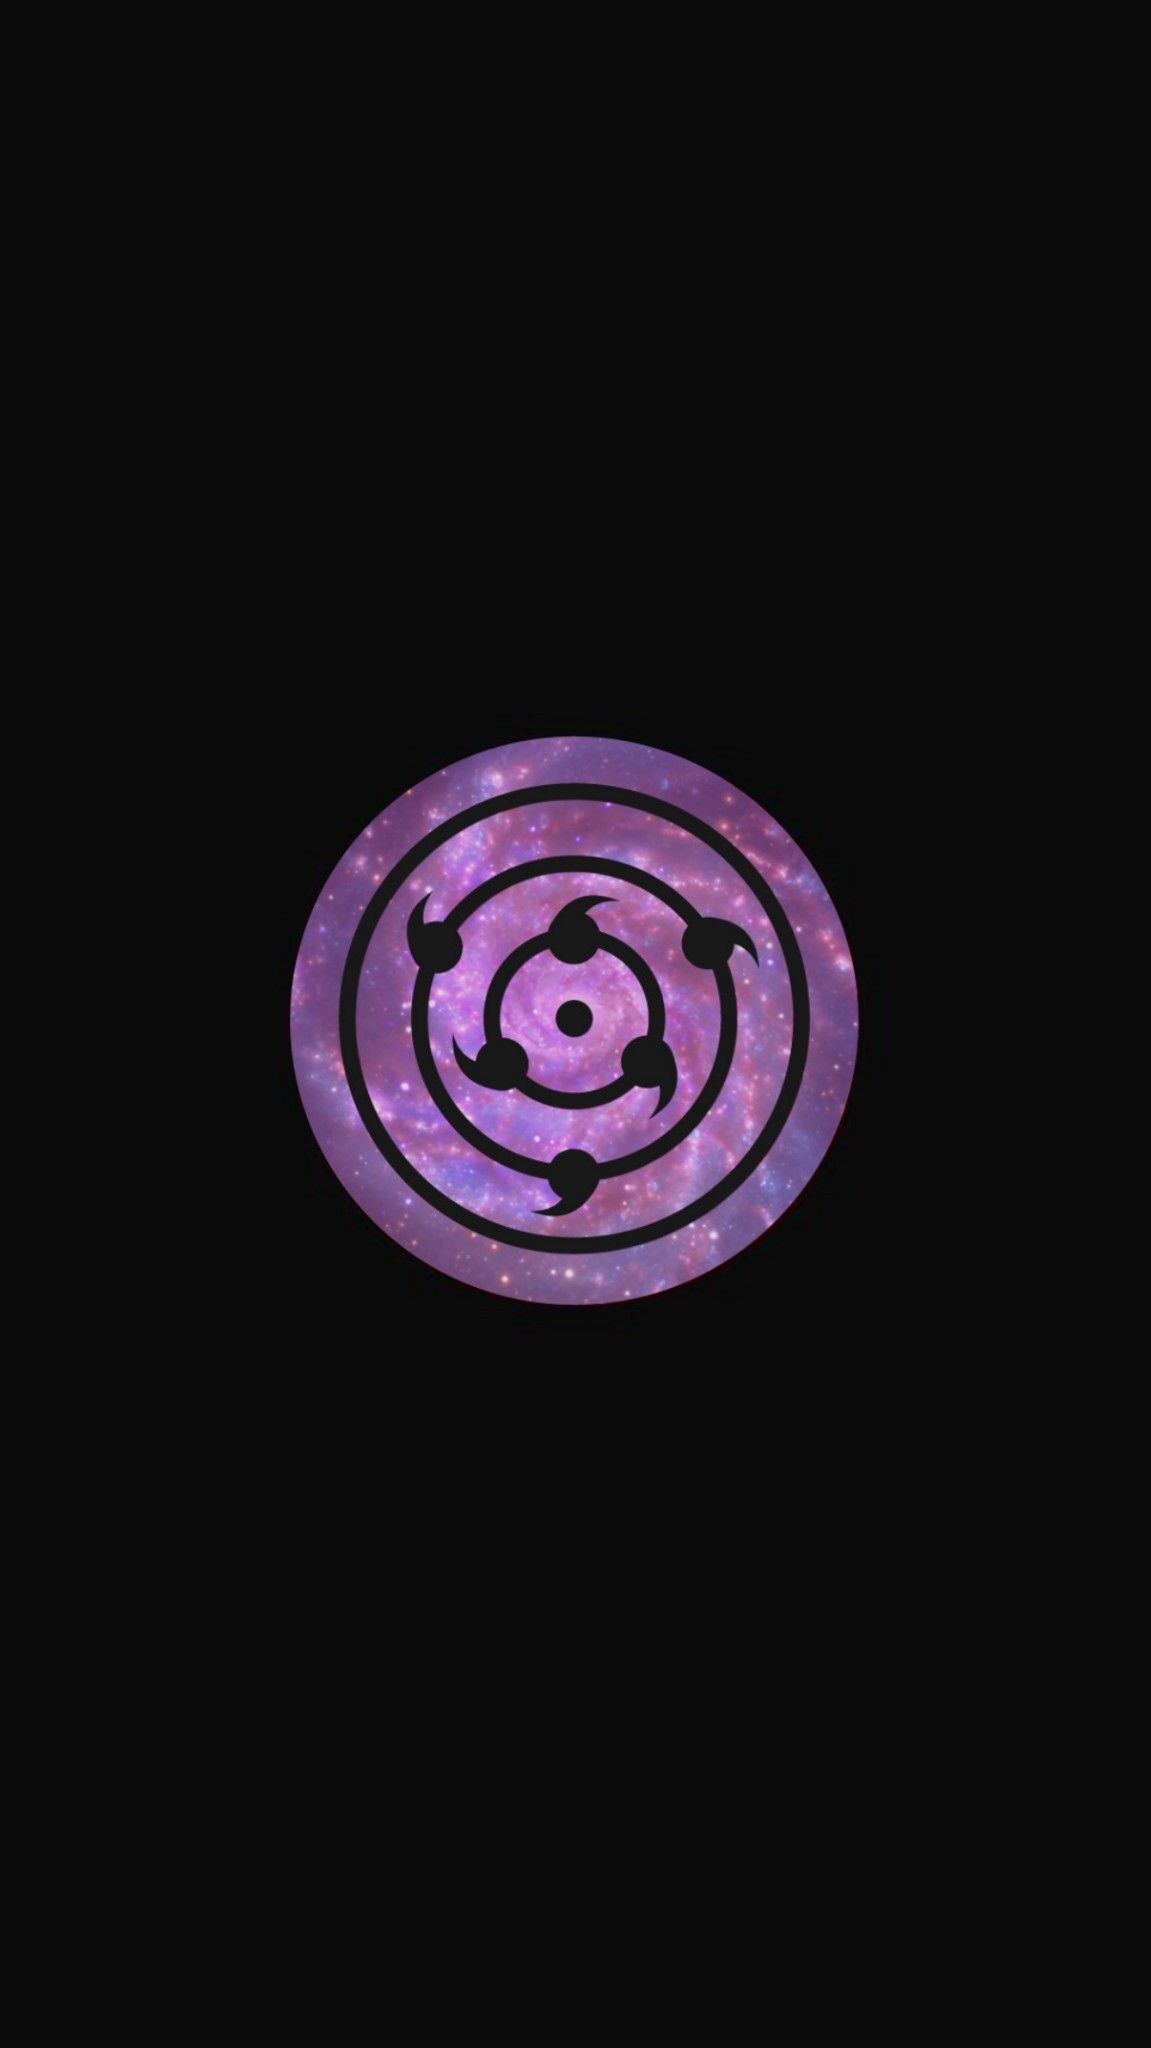 rinnegan live wallpaper,violeta,púrpura,espiral,circulo,animación